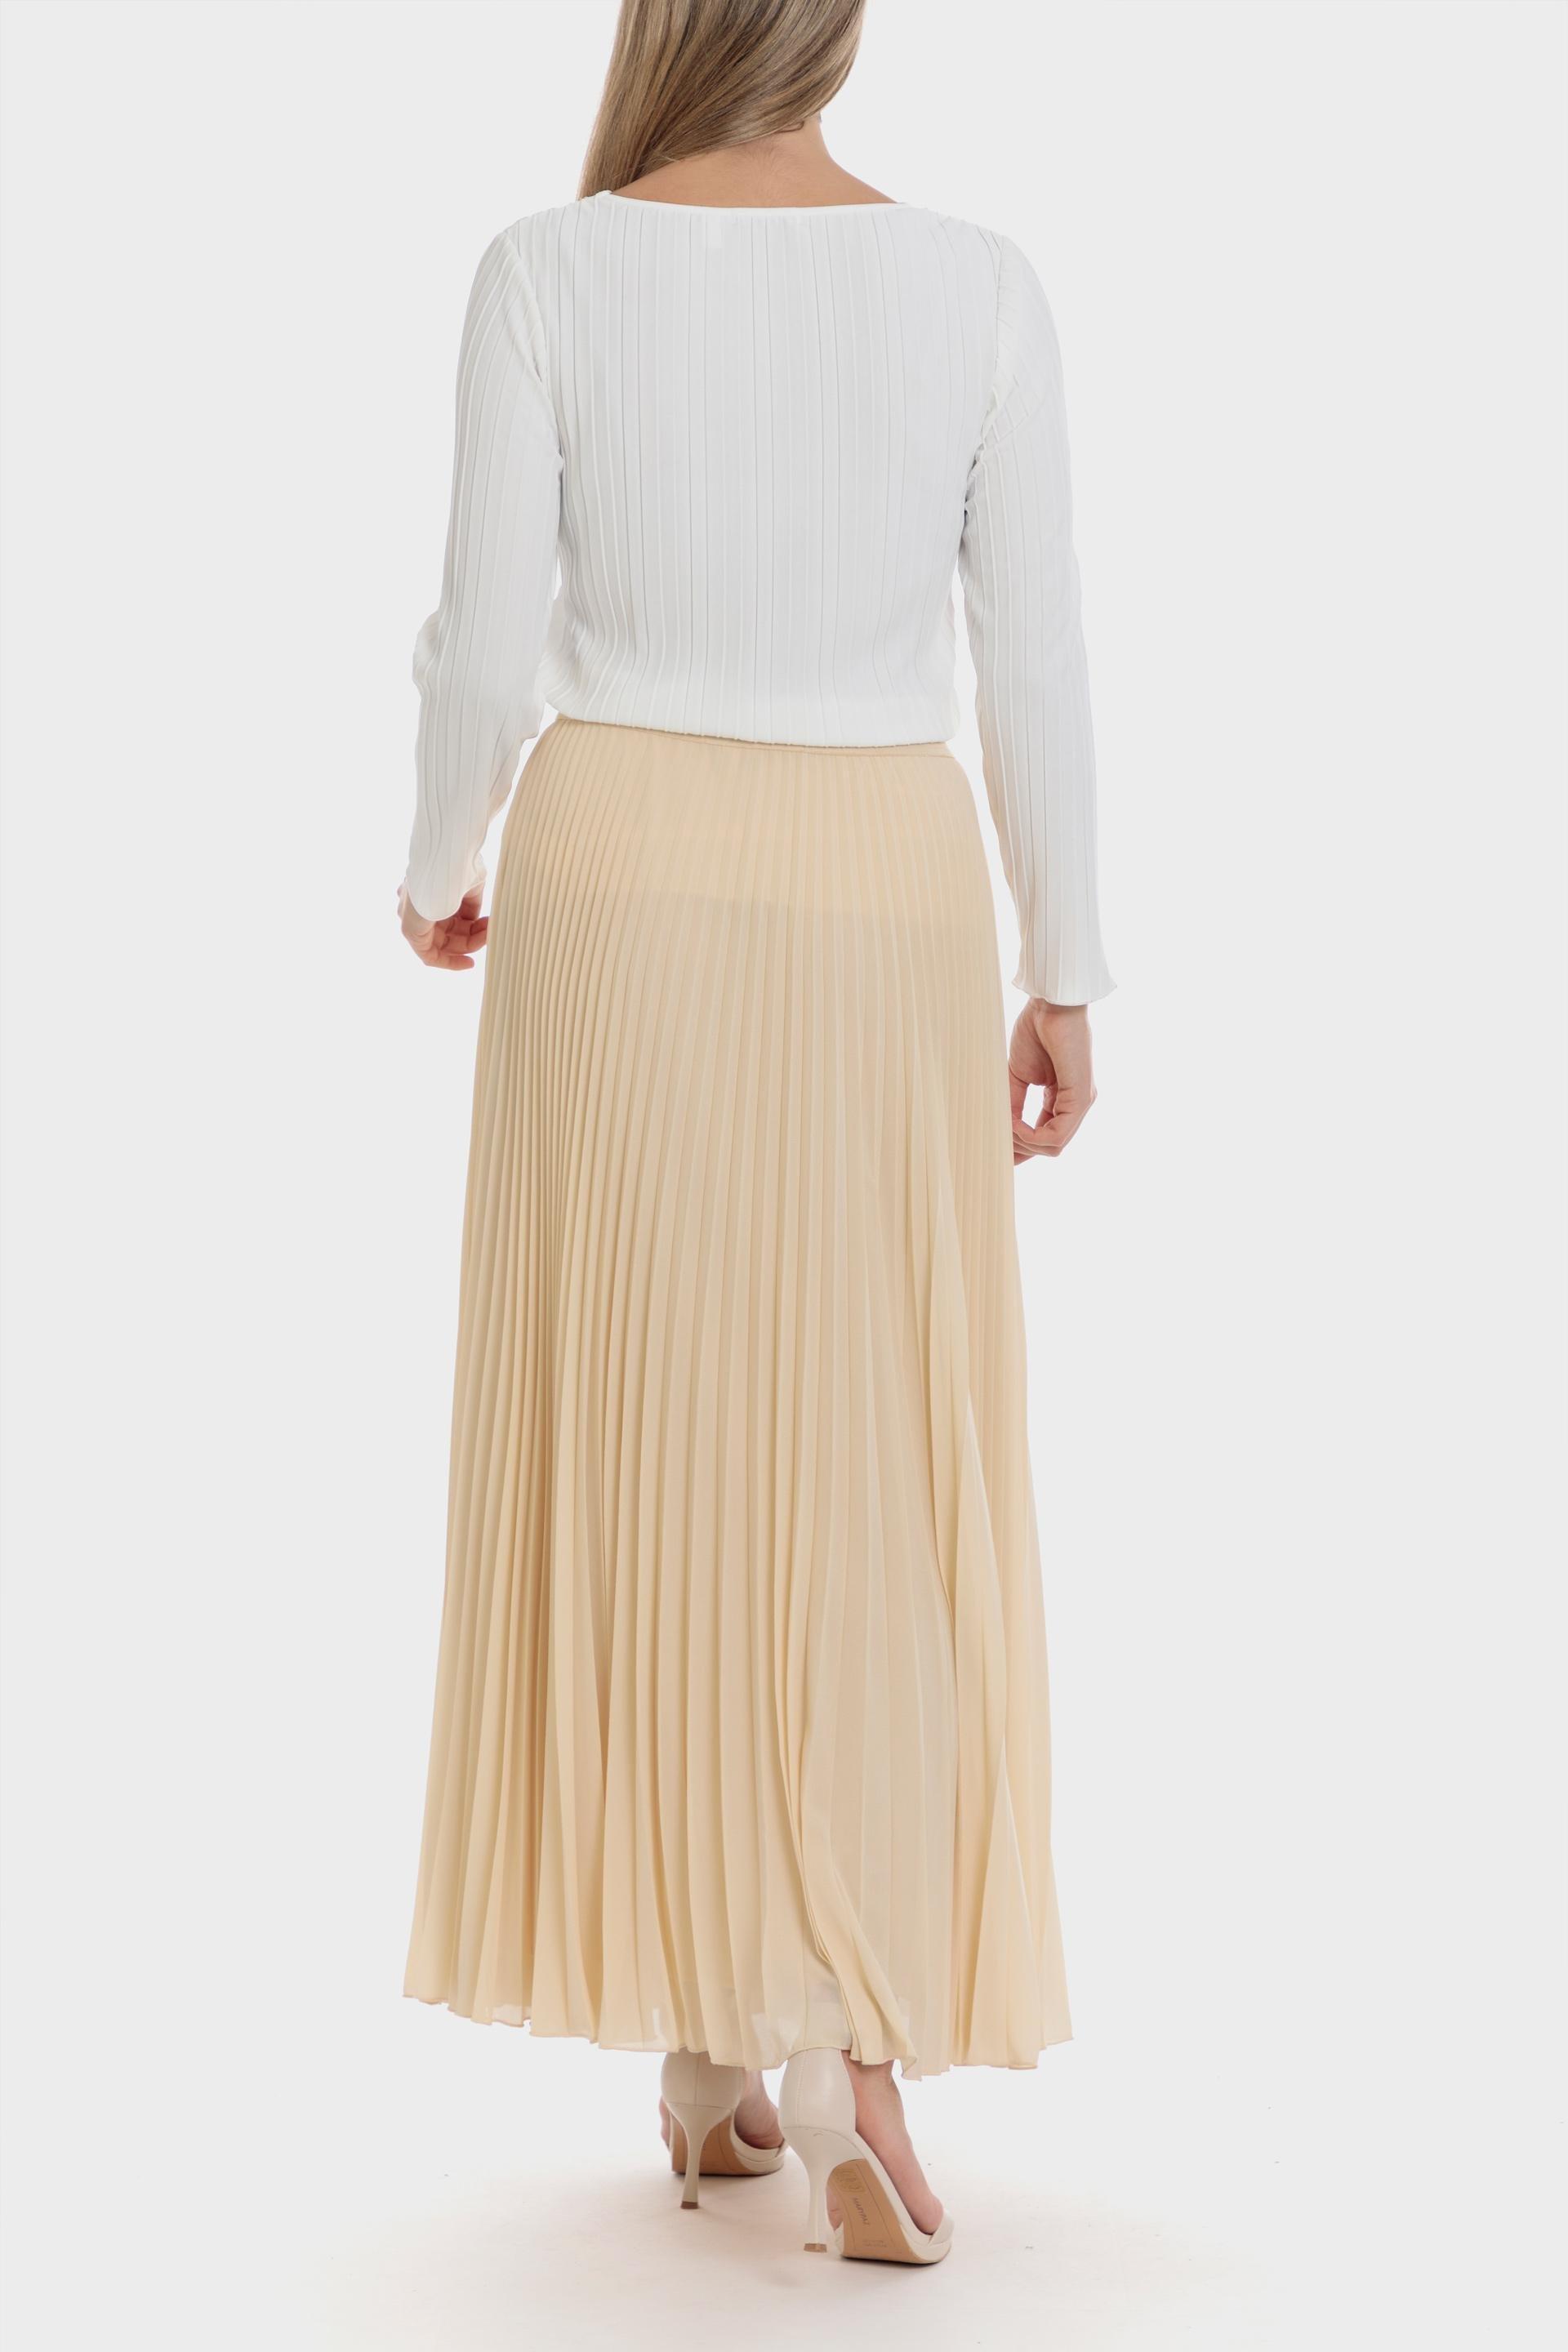 Punt Roma - Beige Long Pleated Skirt